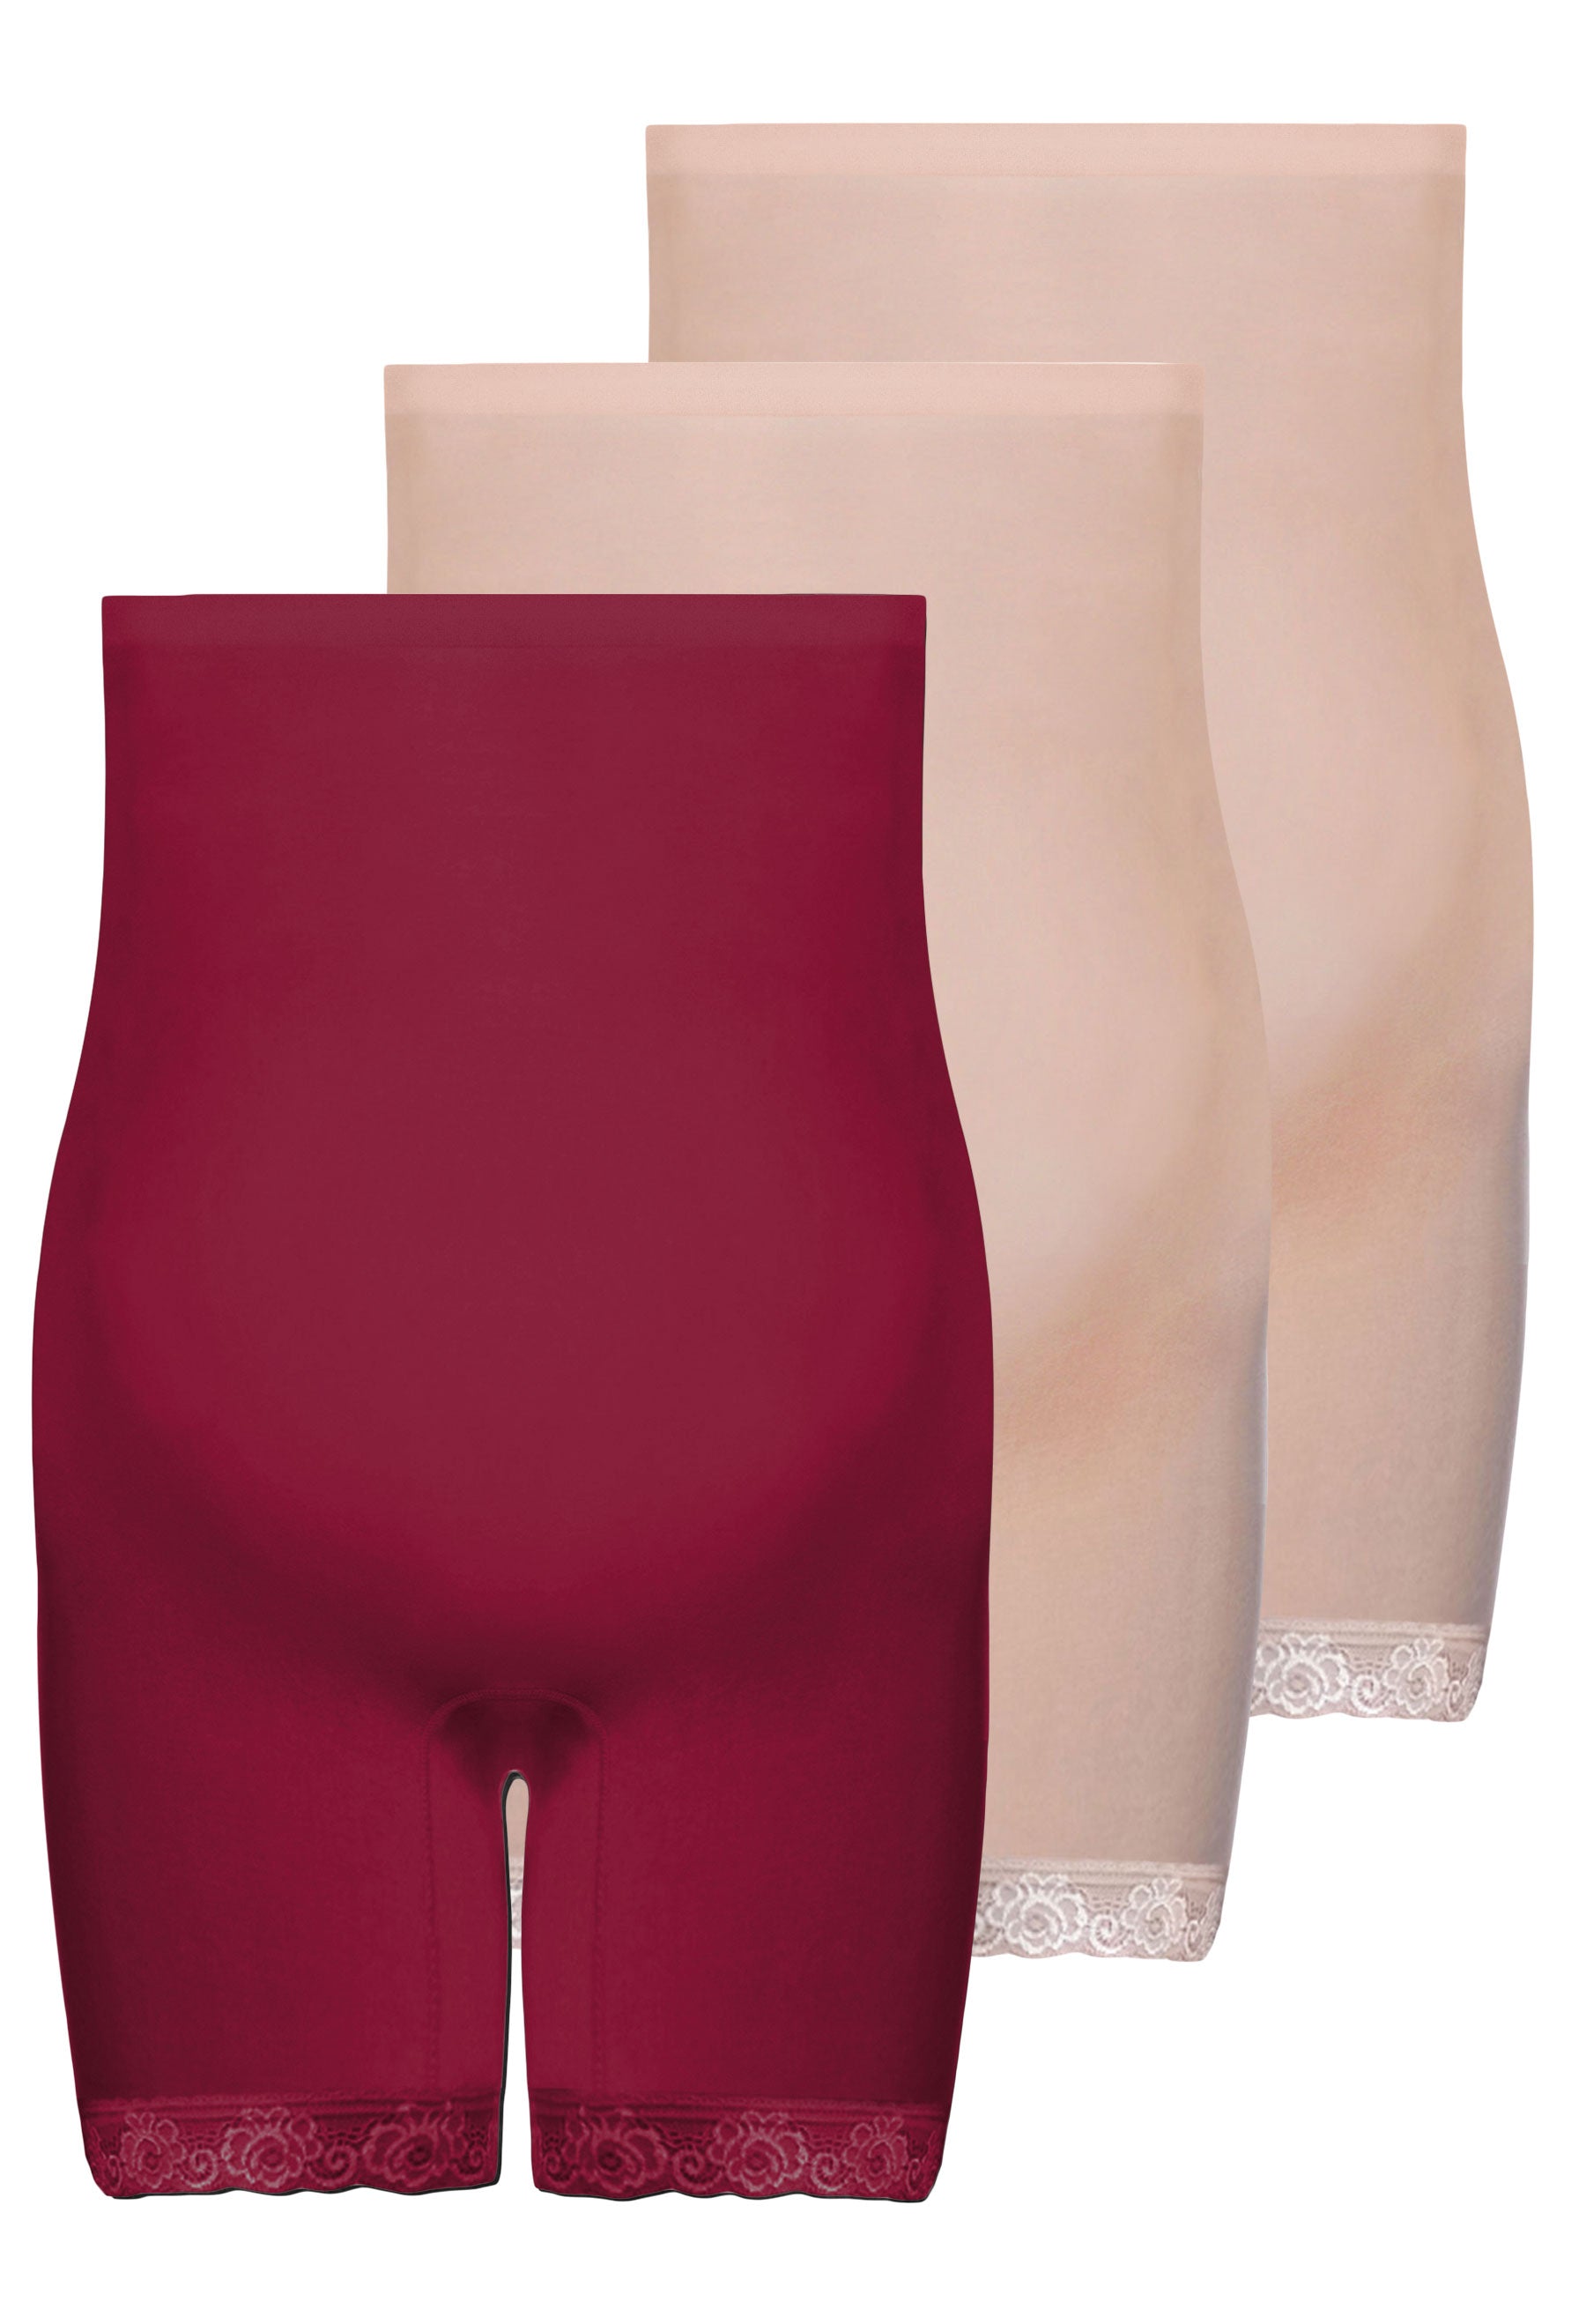 Maternity Underbust Anti Chafing Midi Cotton Shorts - 3 Pack